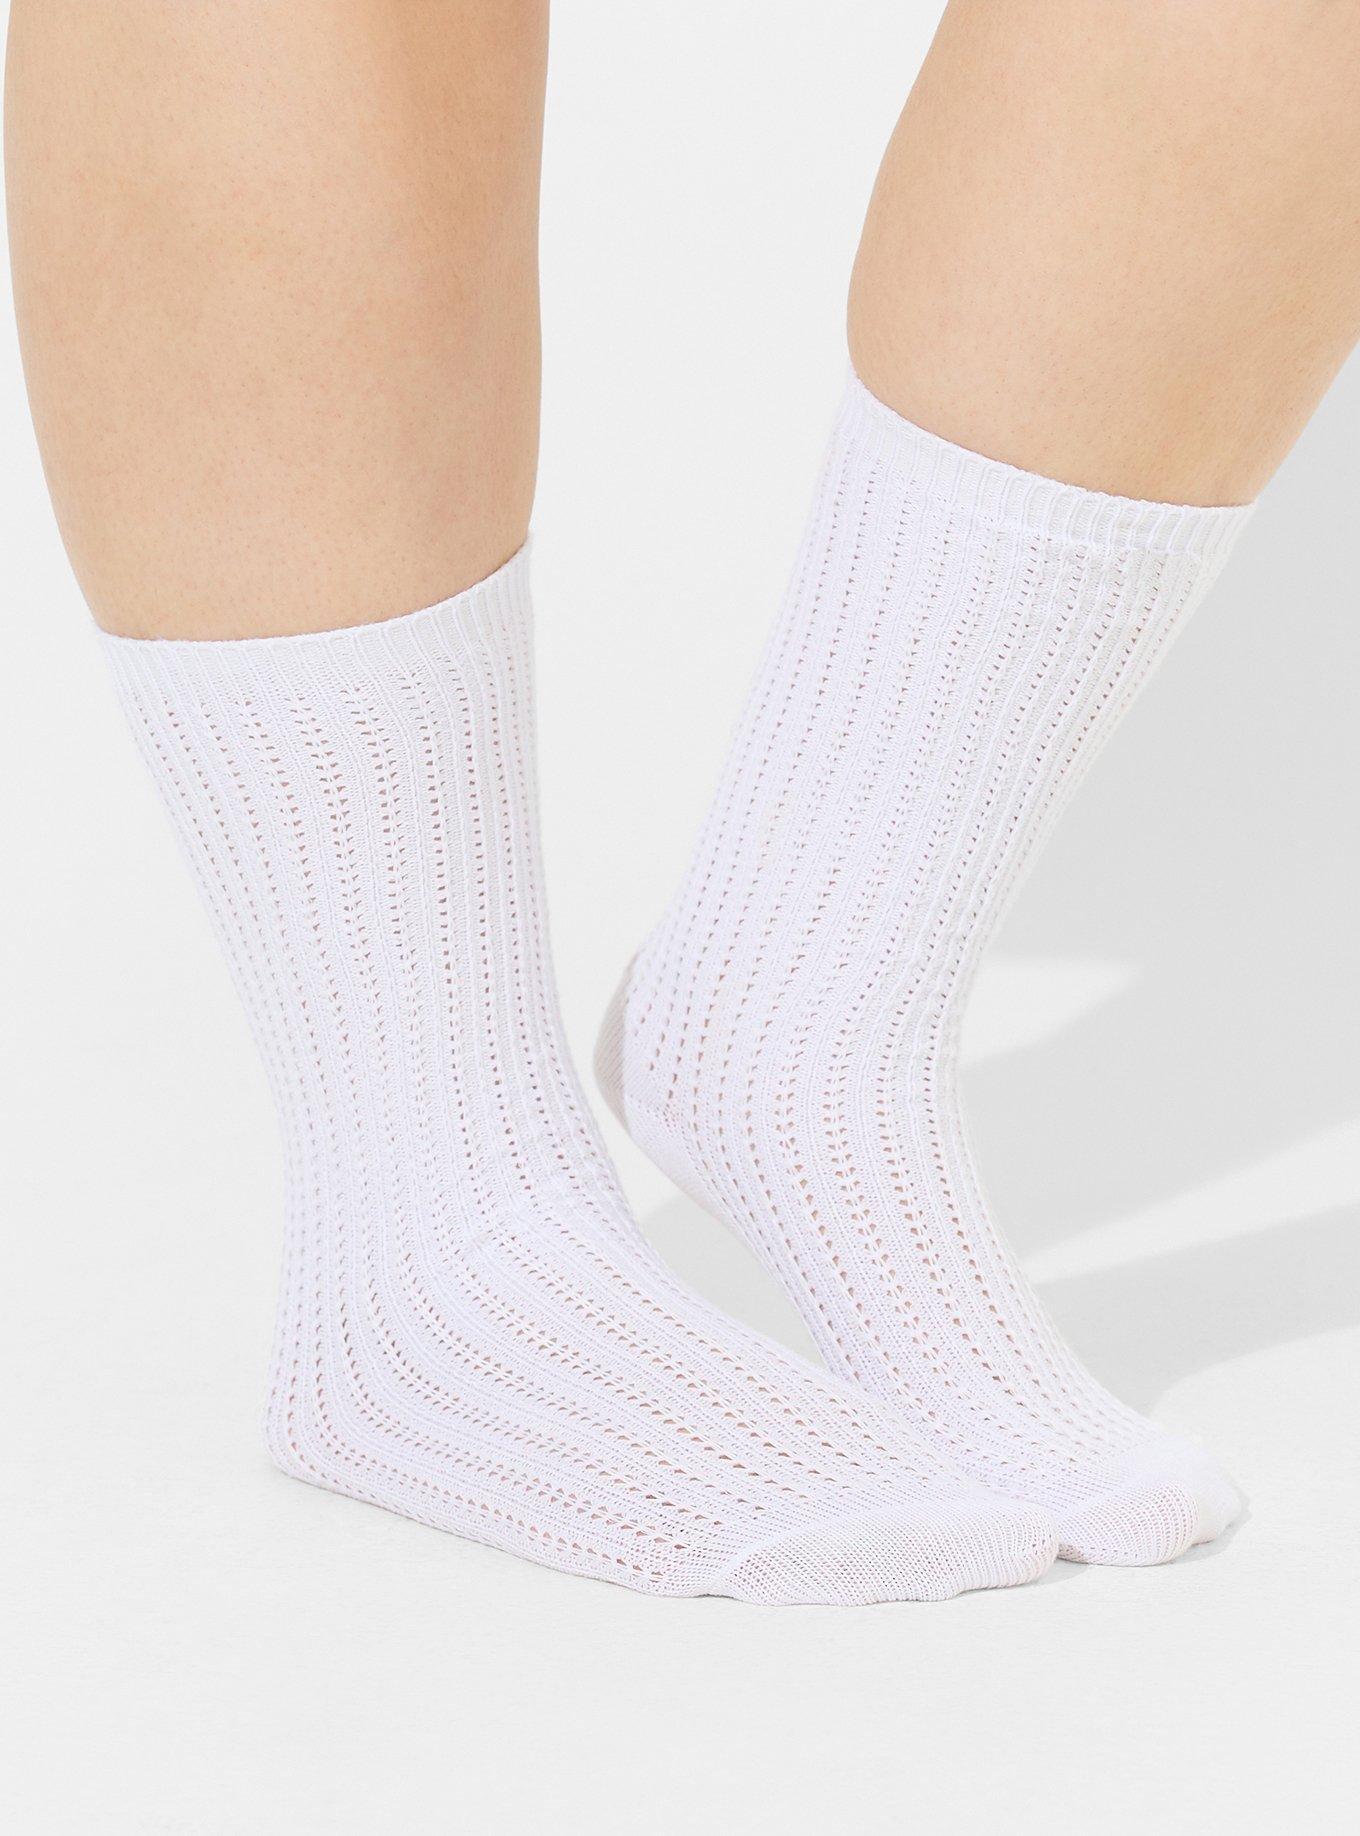 Slouchy Loafer Socks